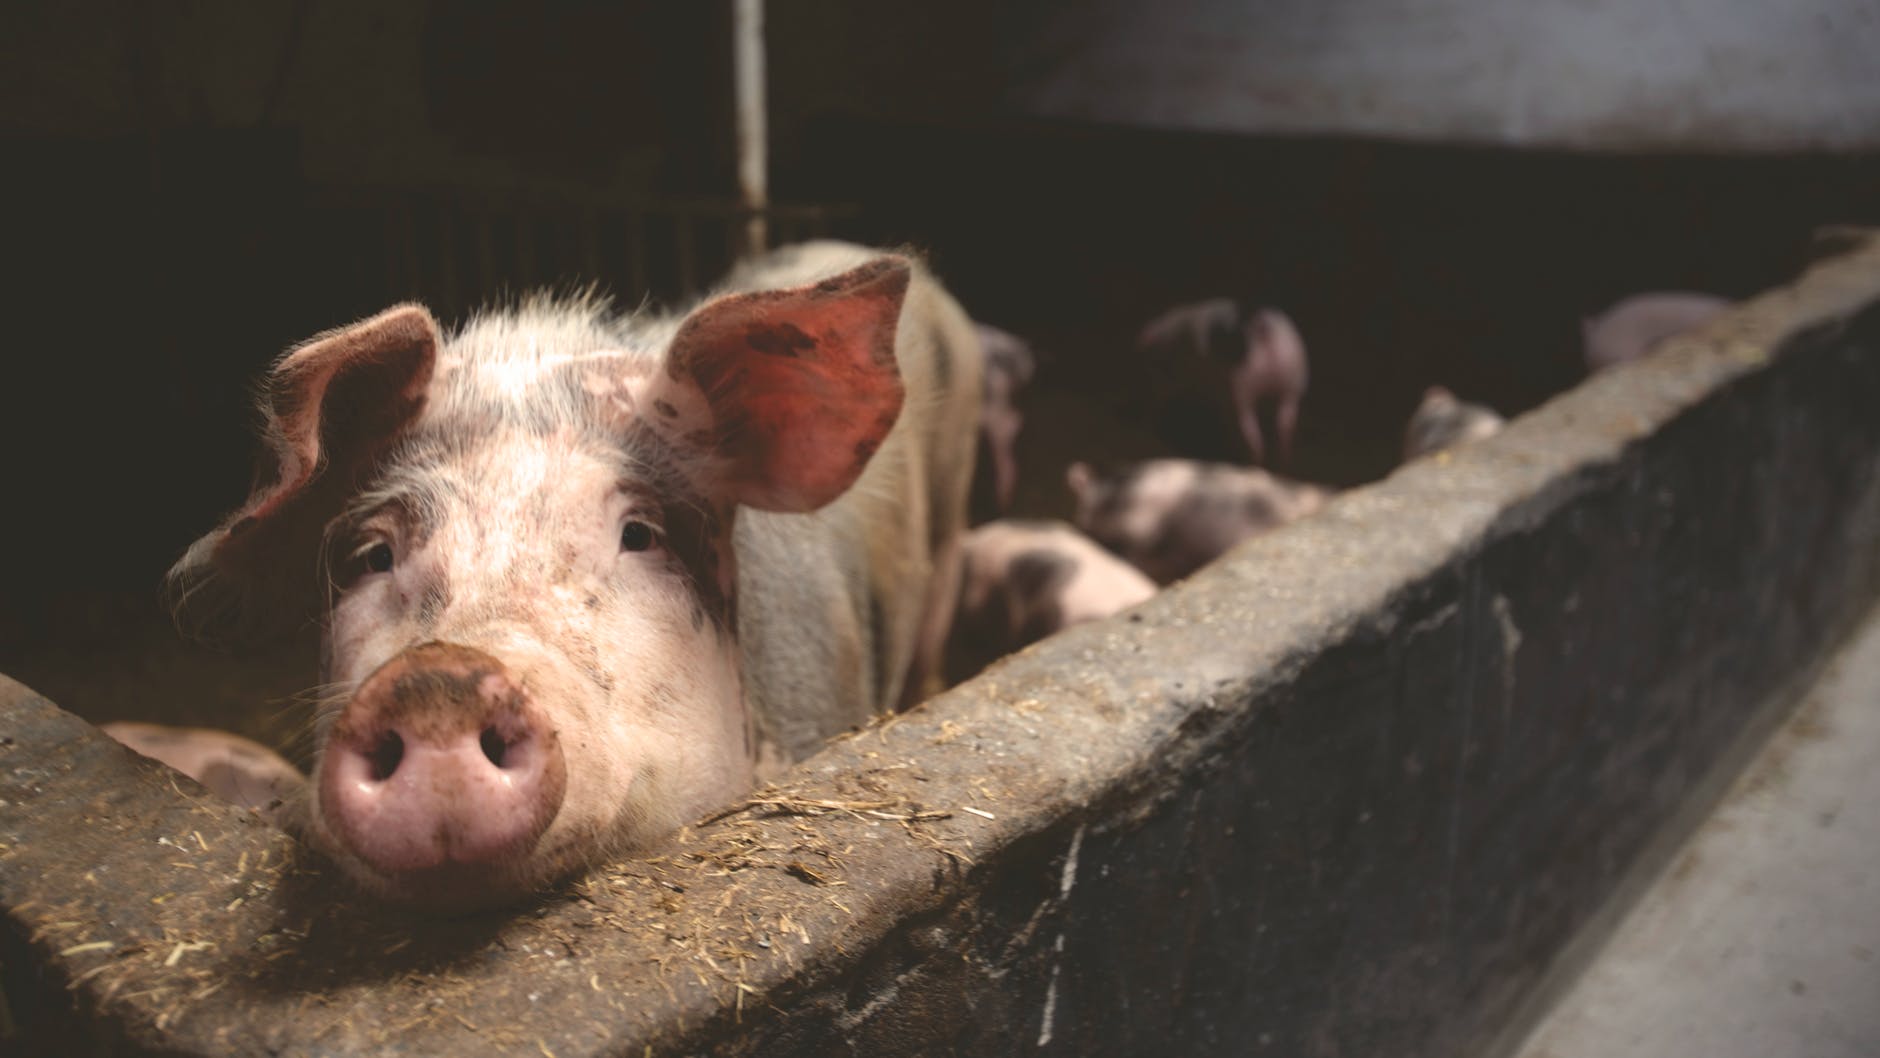 Caavakushi Vegan Search Engine Animal Rights Pig animal cruelty why go vegan